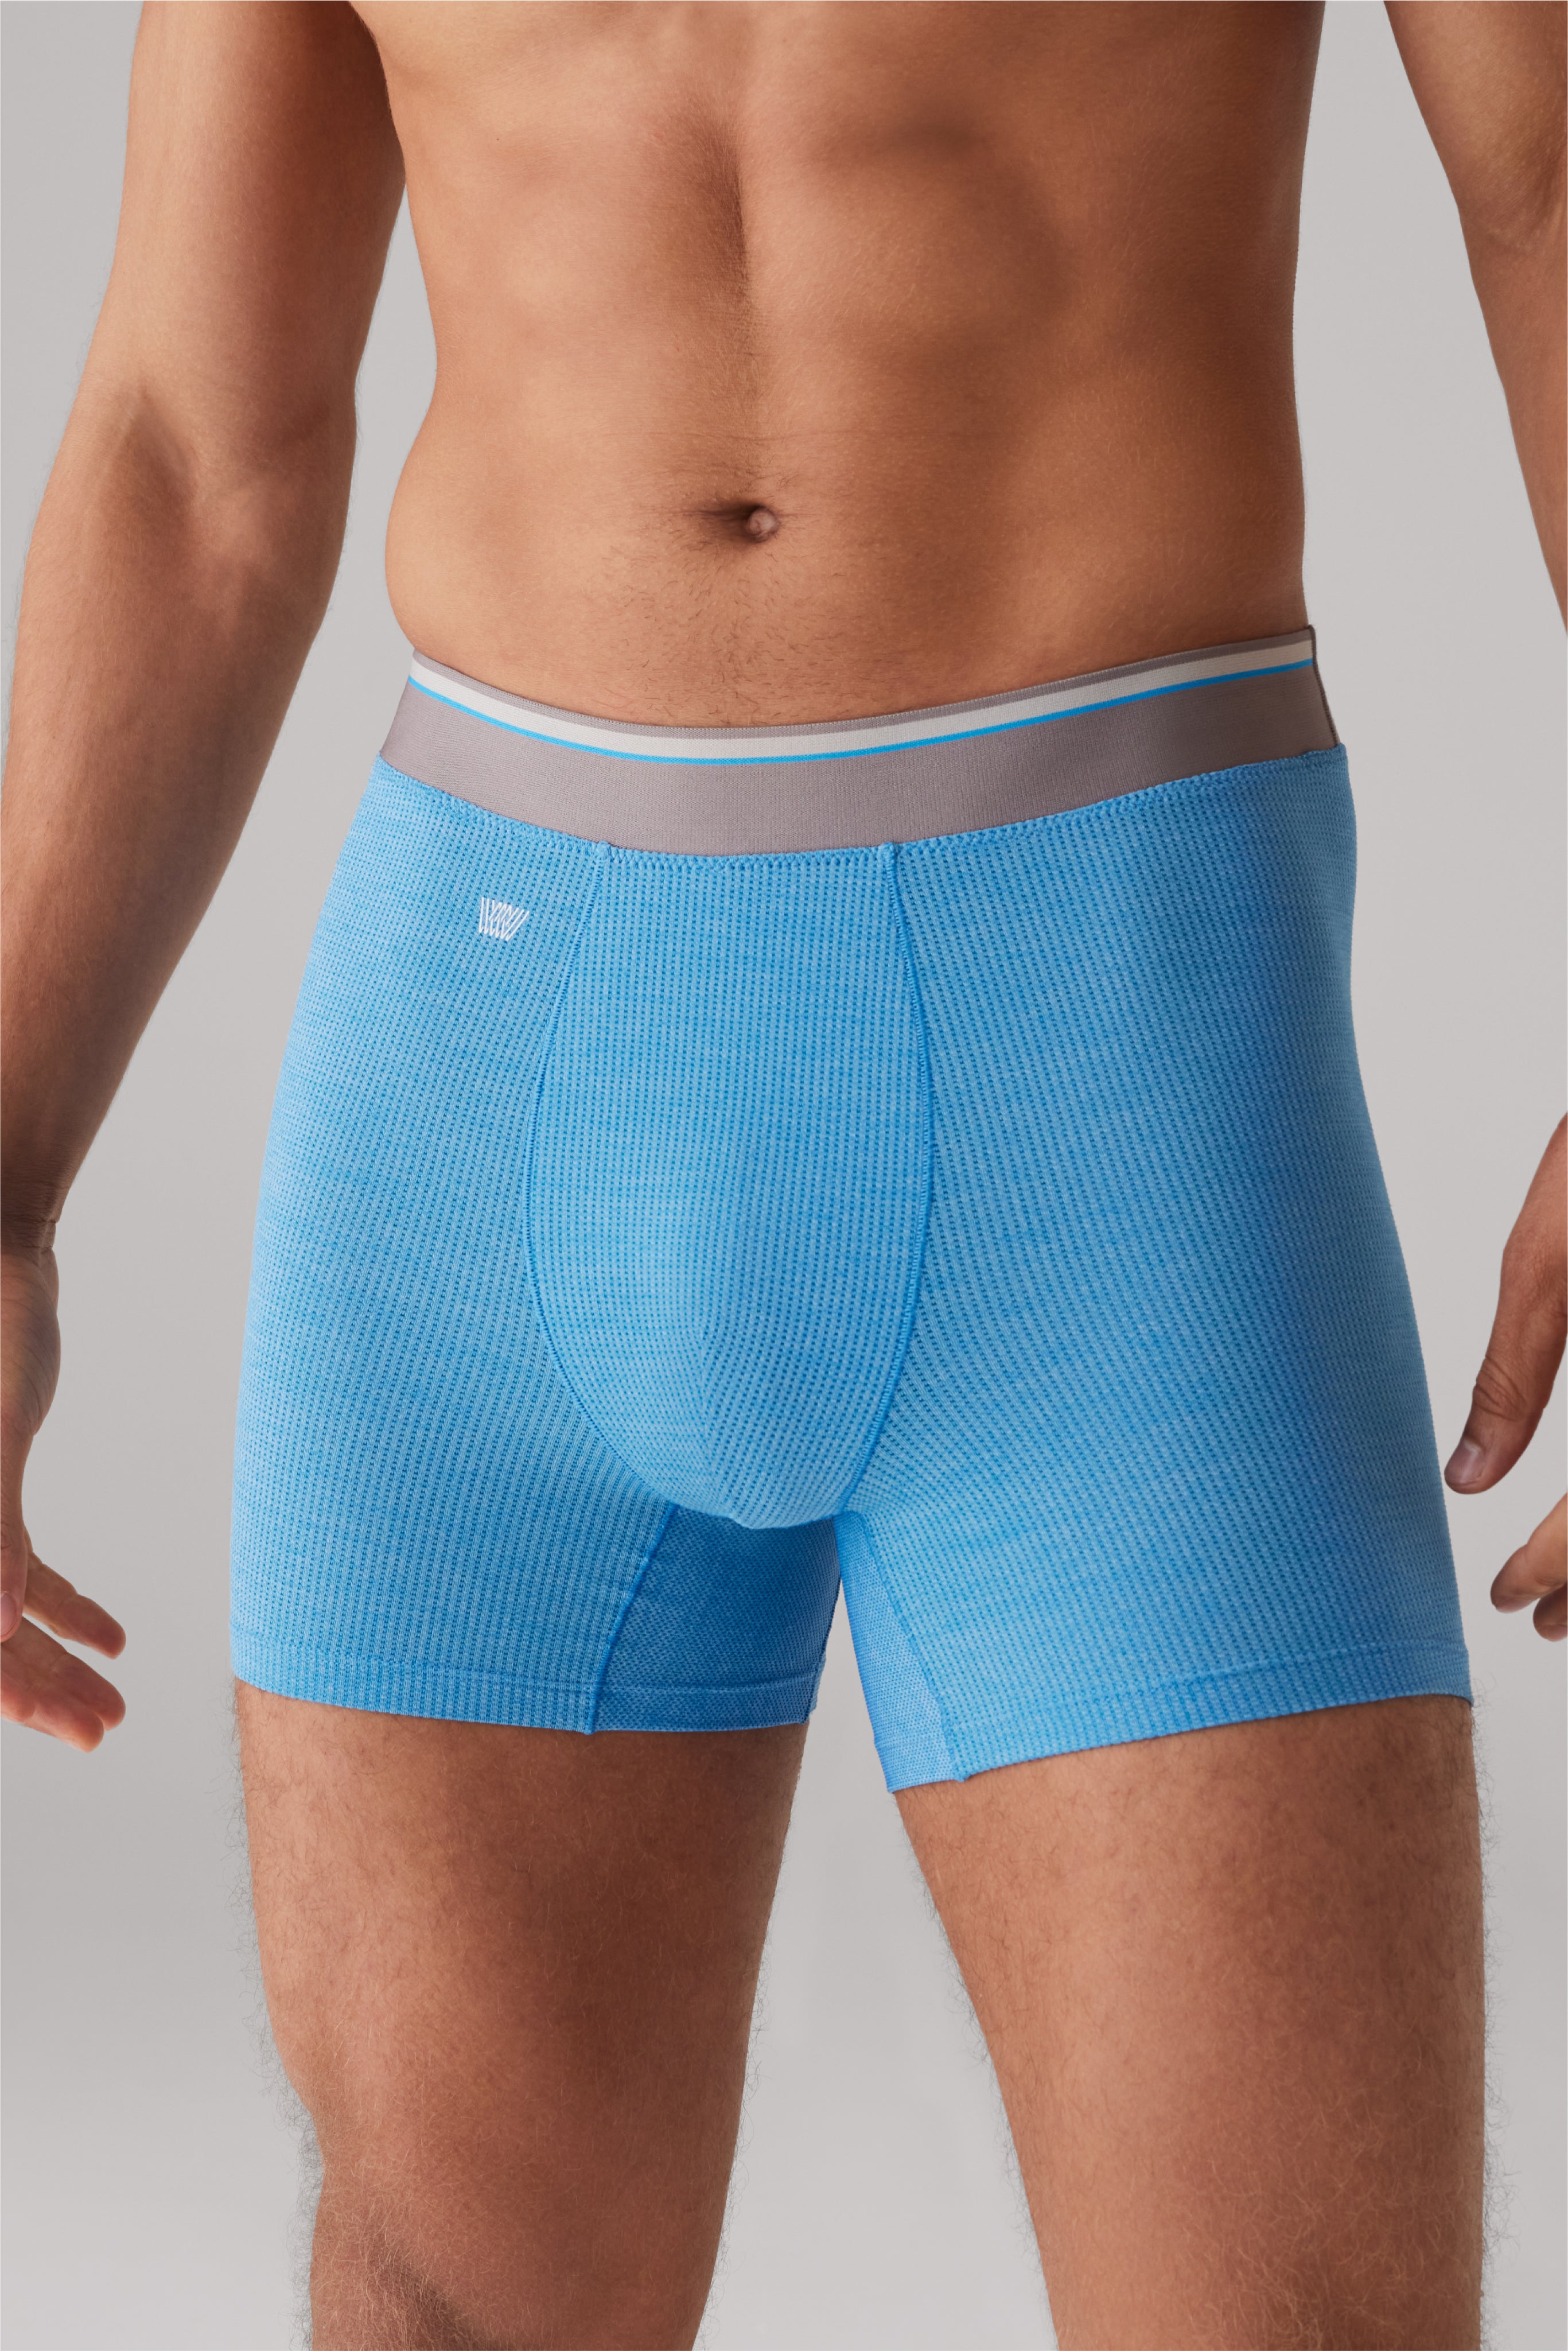 Mack Weldon Underwear Review - AIRKNITx HD 8 Boxer Briefs - Cloth